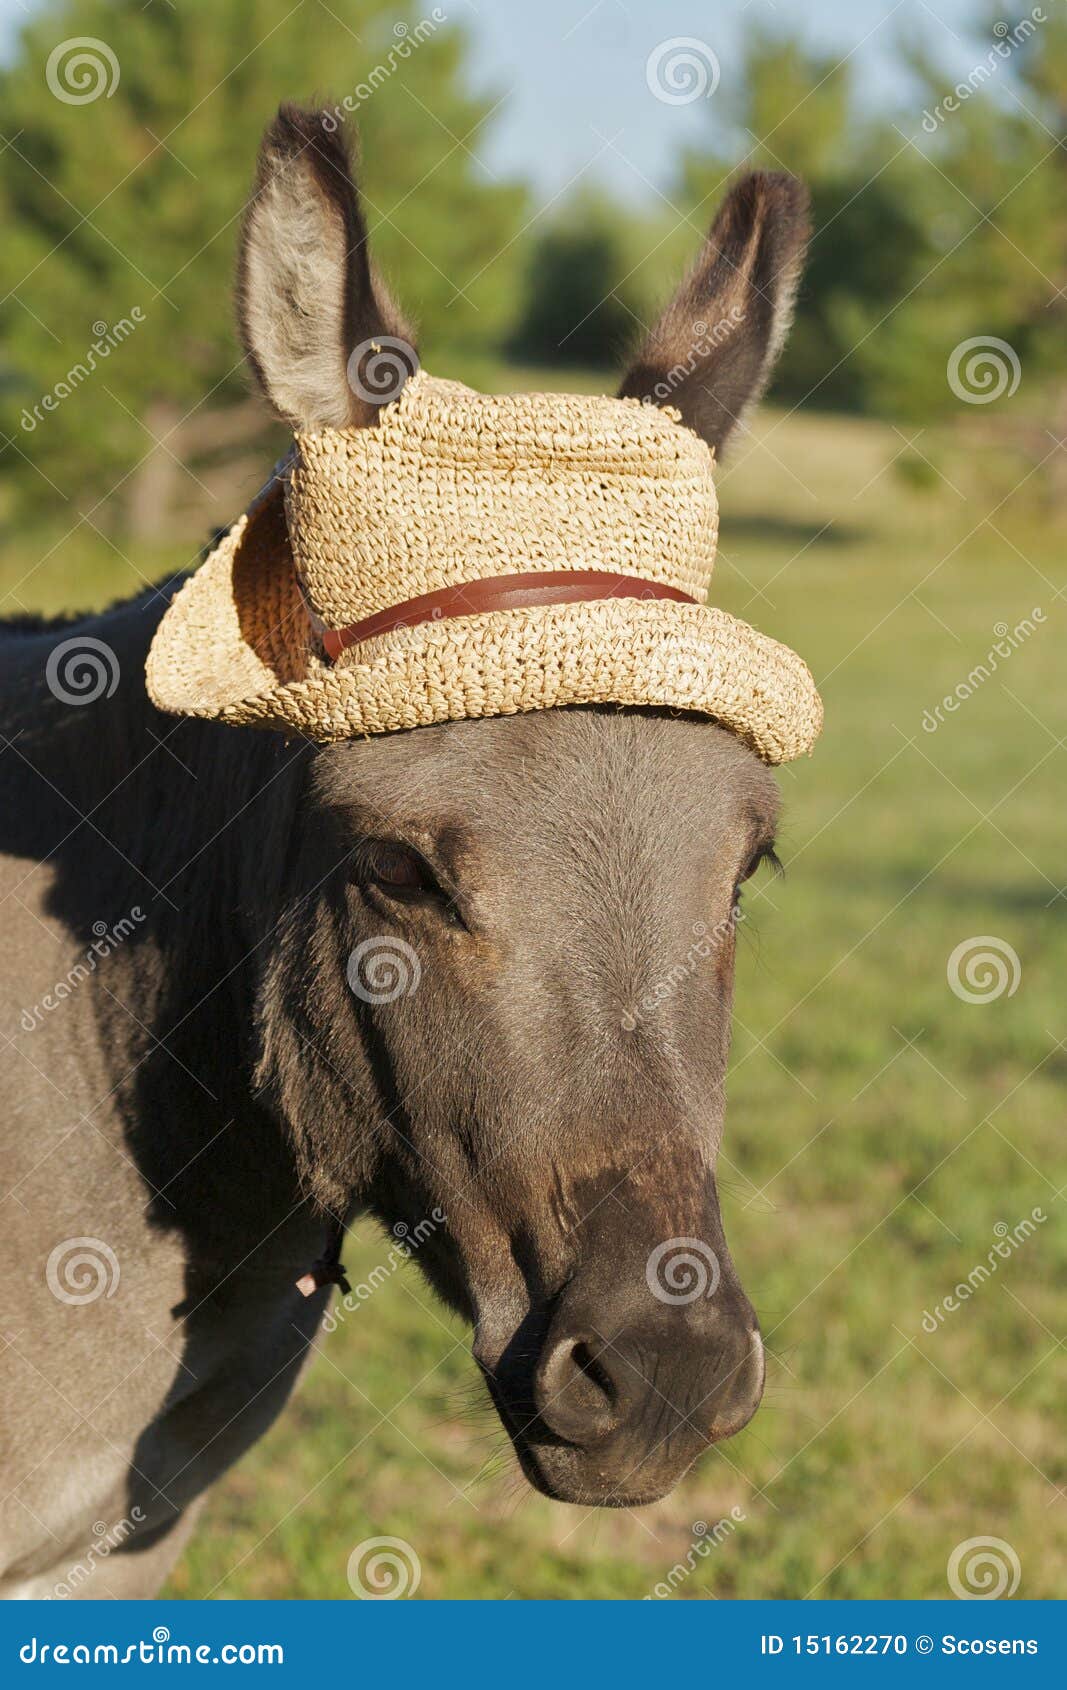 miniature-donkey-hat-15162270.jpg